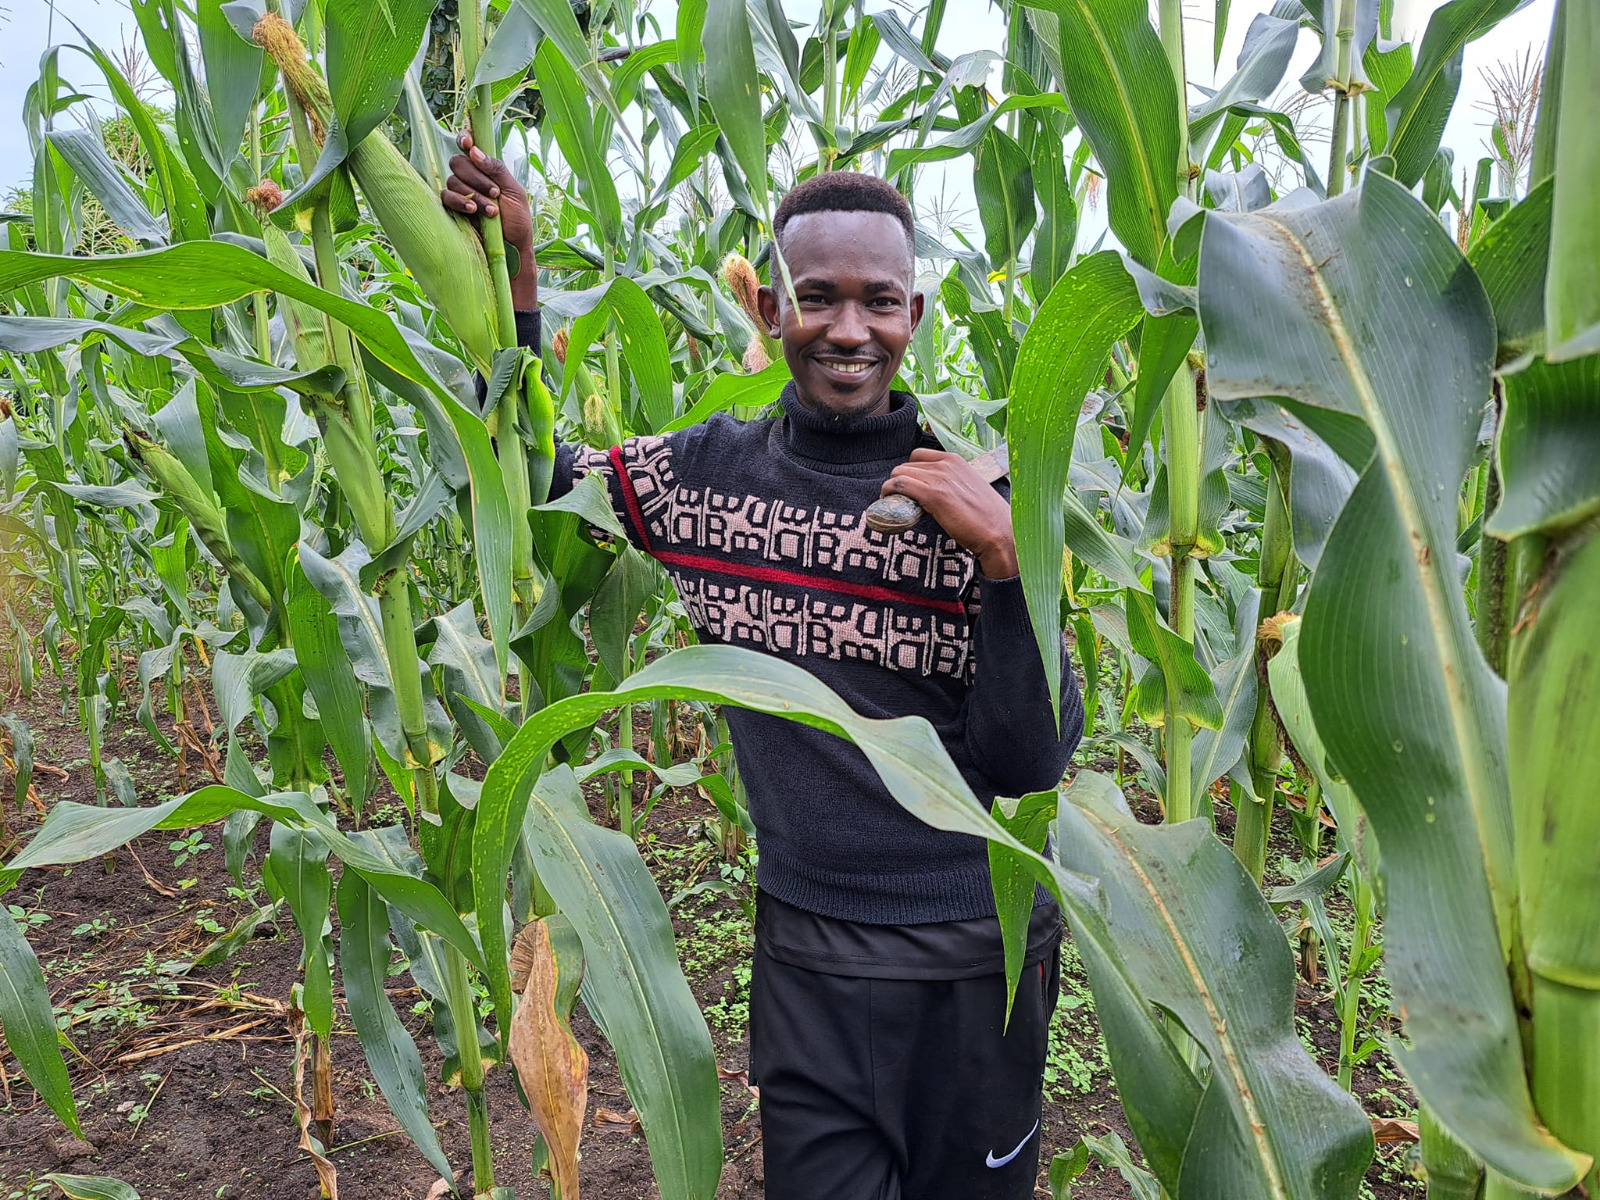 Yei farmer Emmanuel Anur seeks to commercialize maize farm